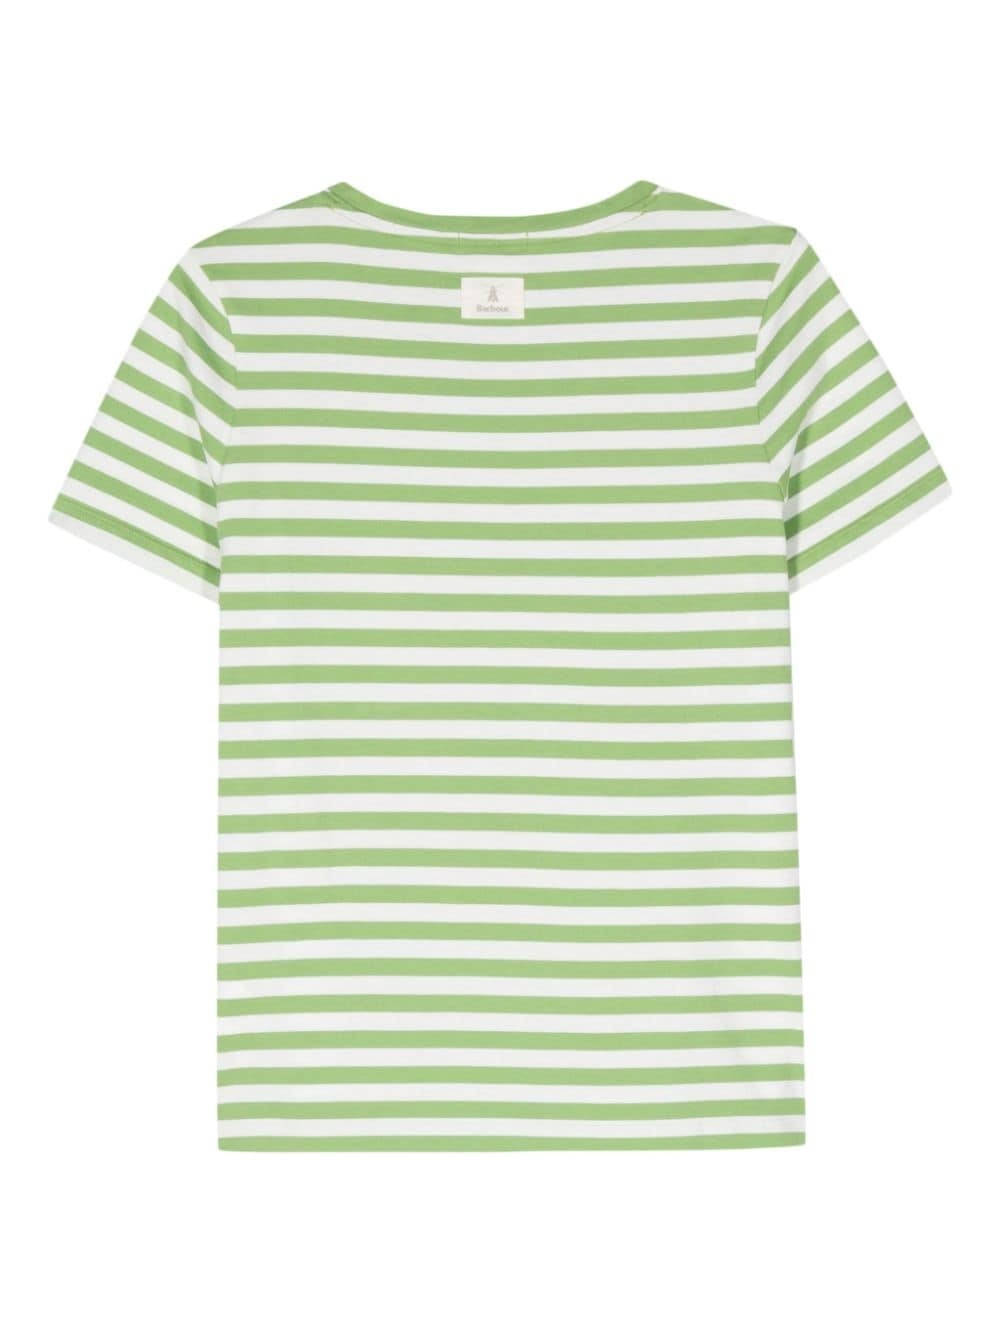 Ferryside striped T-Shirt - 2